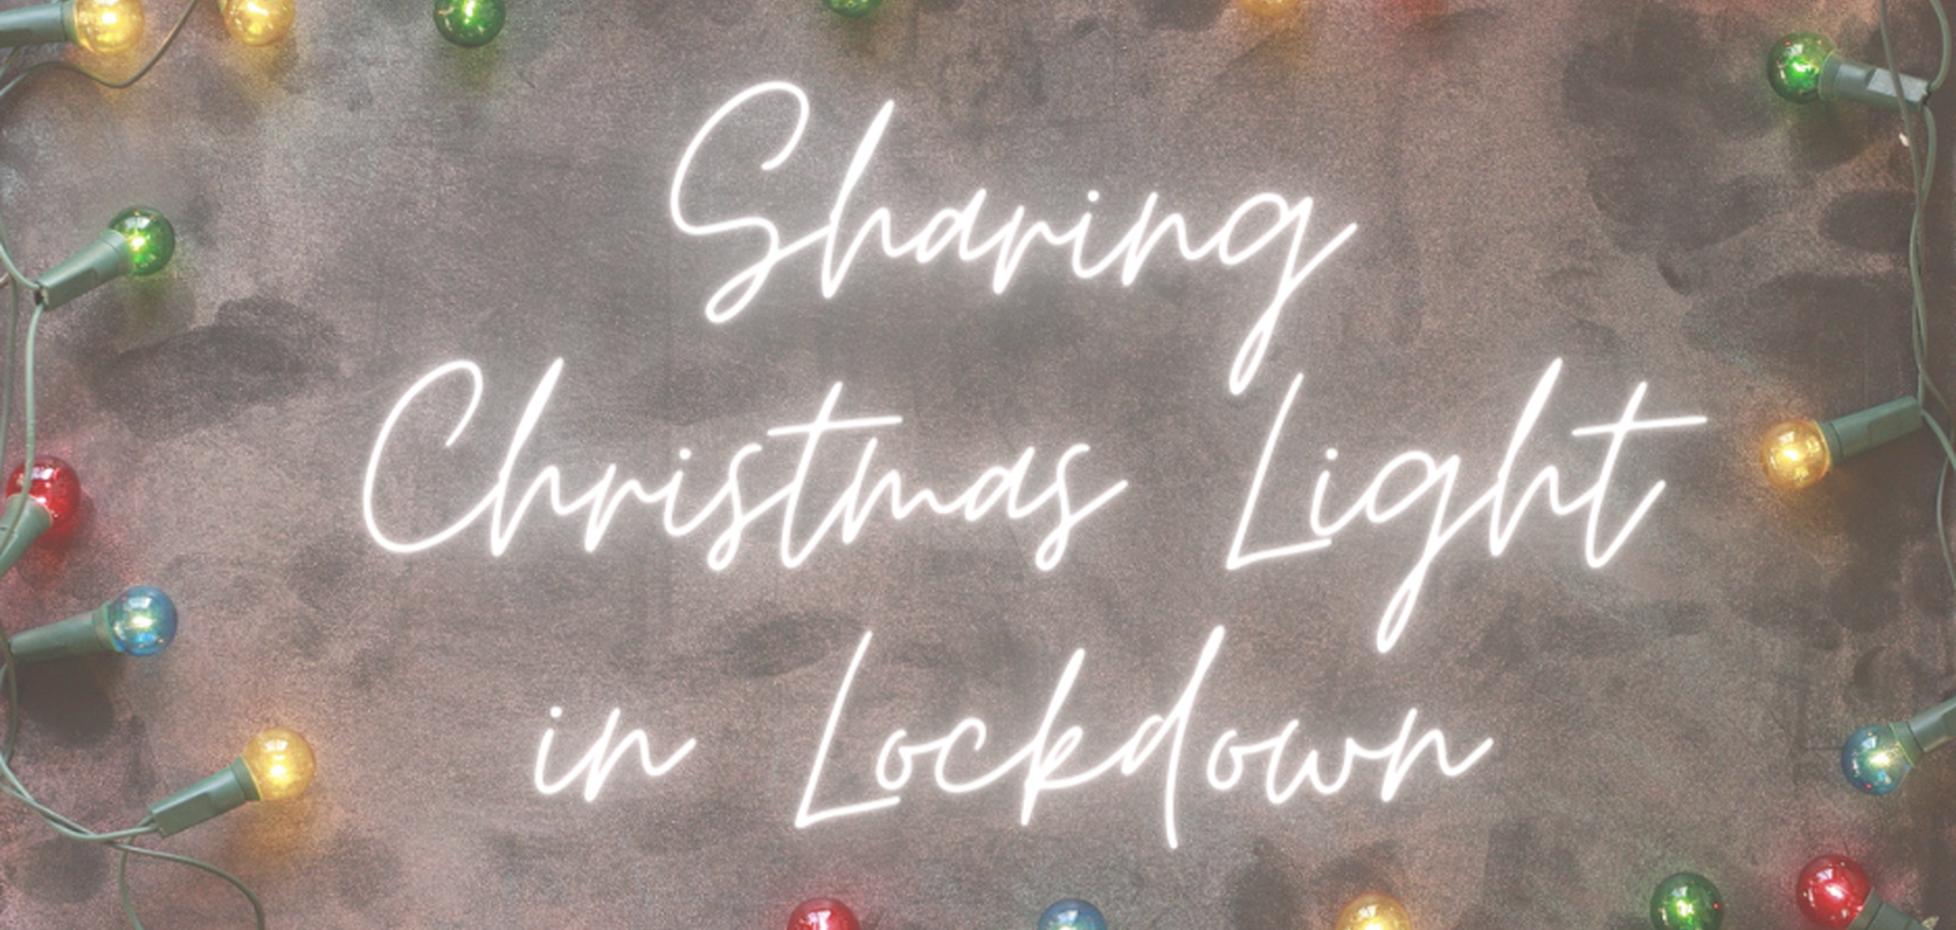 Sharing Christmas Light in Lockdown